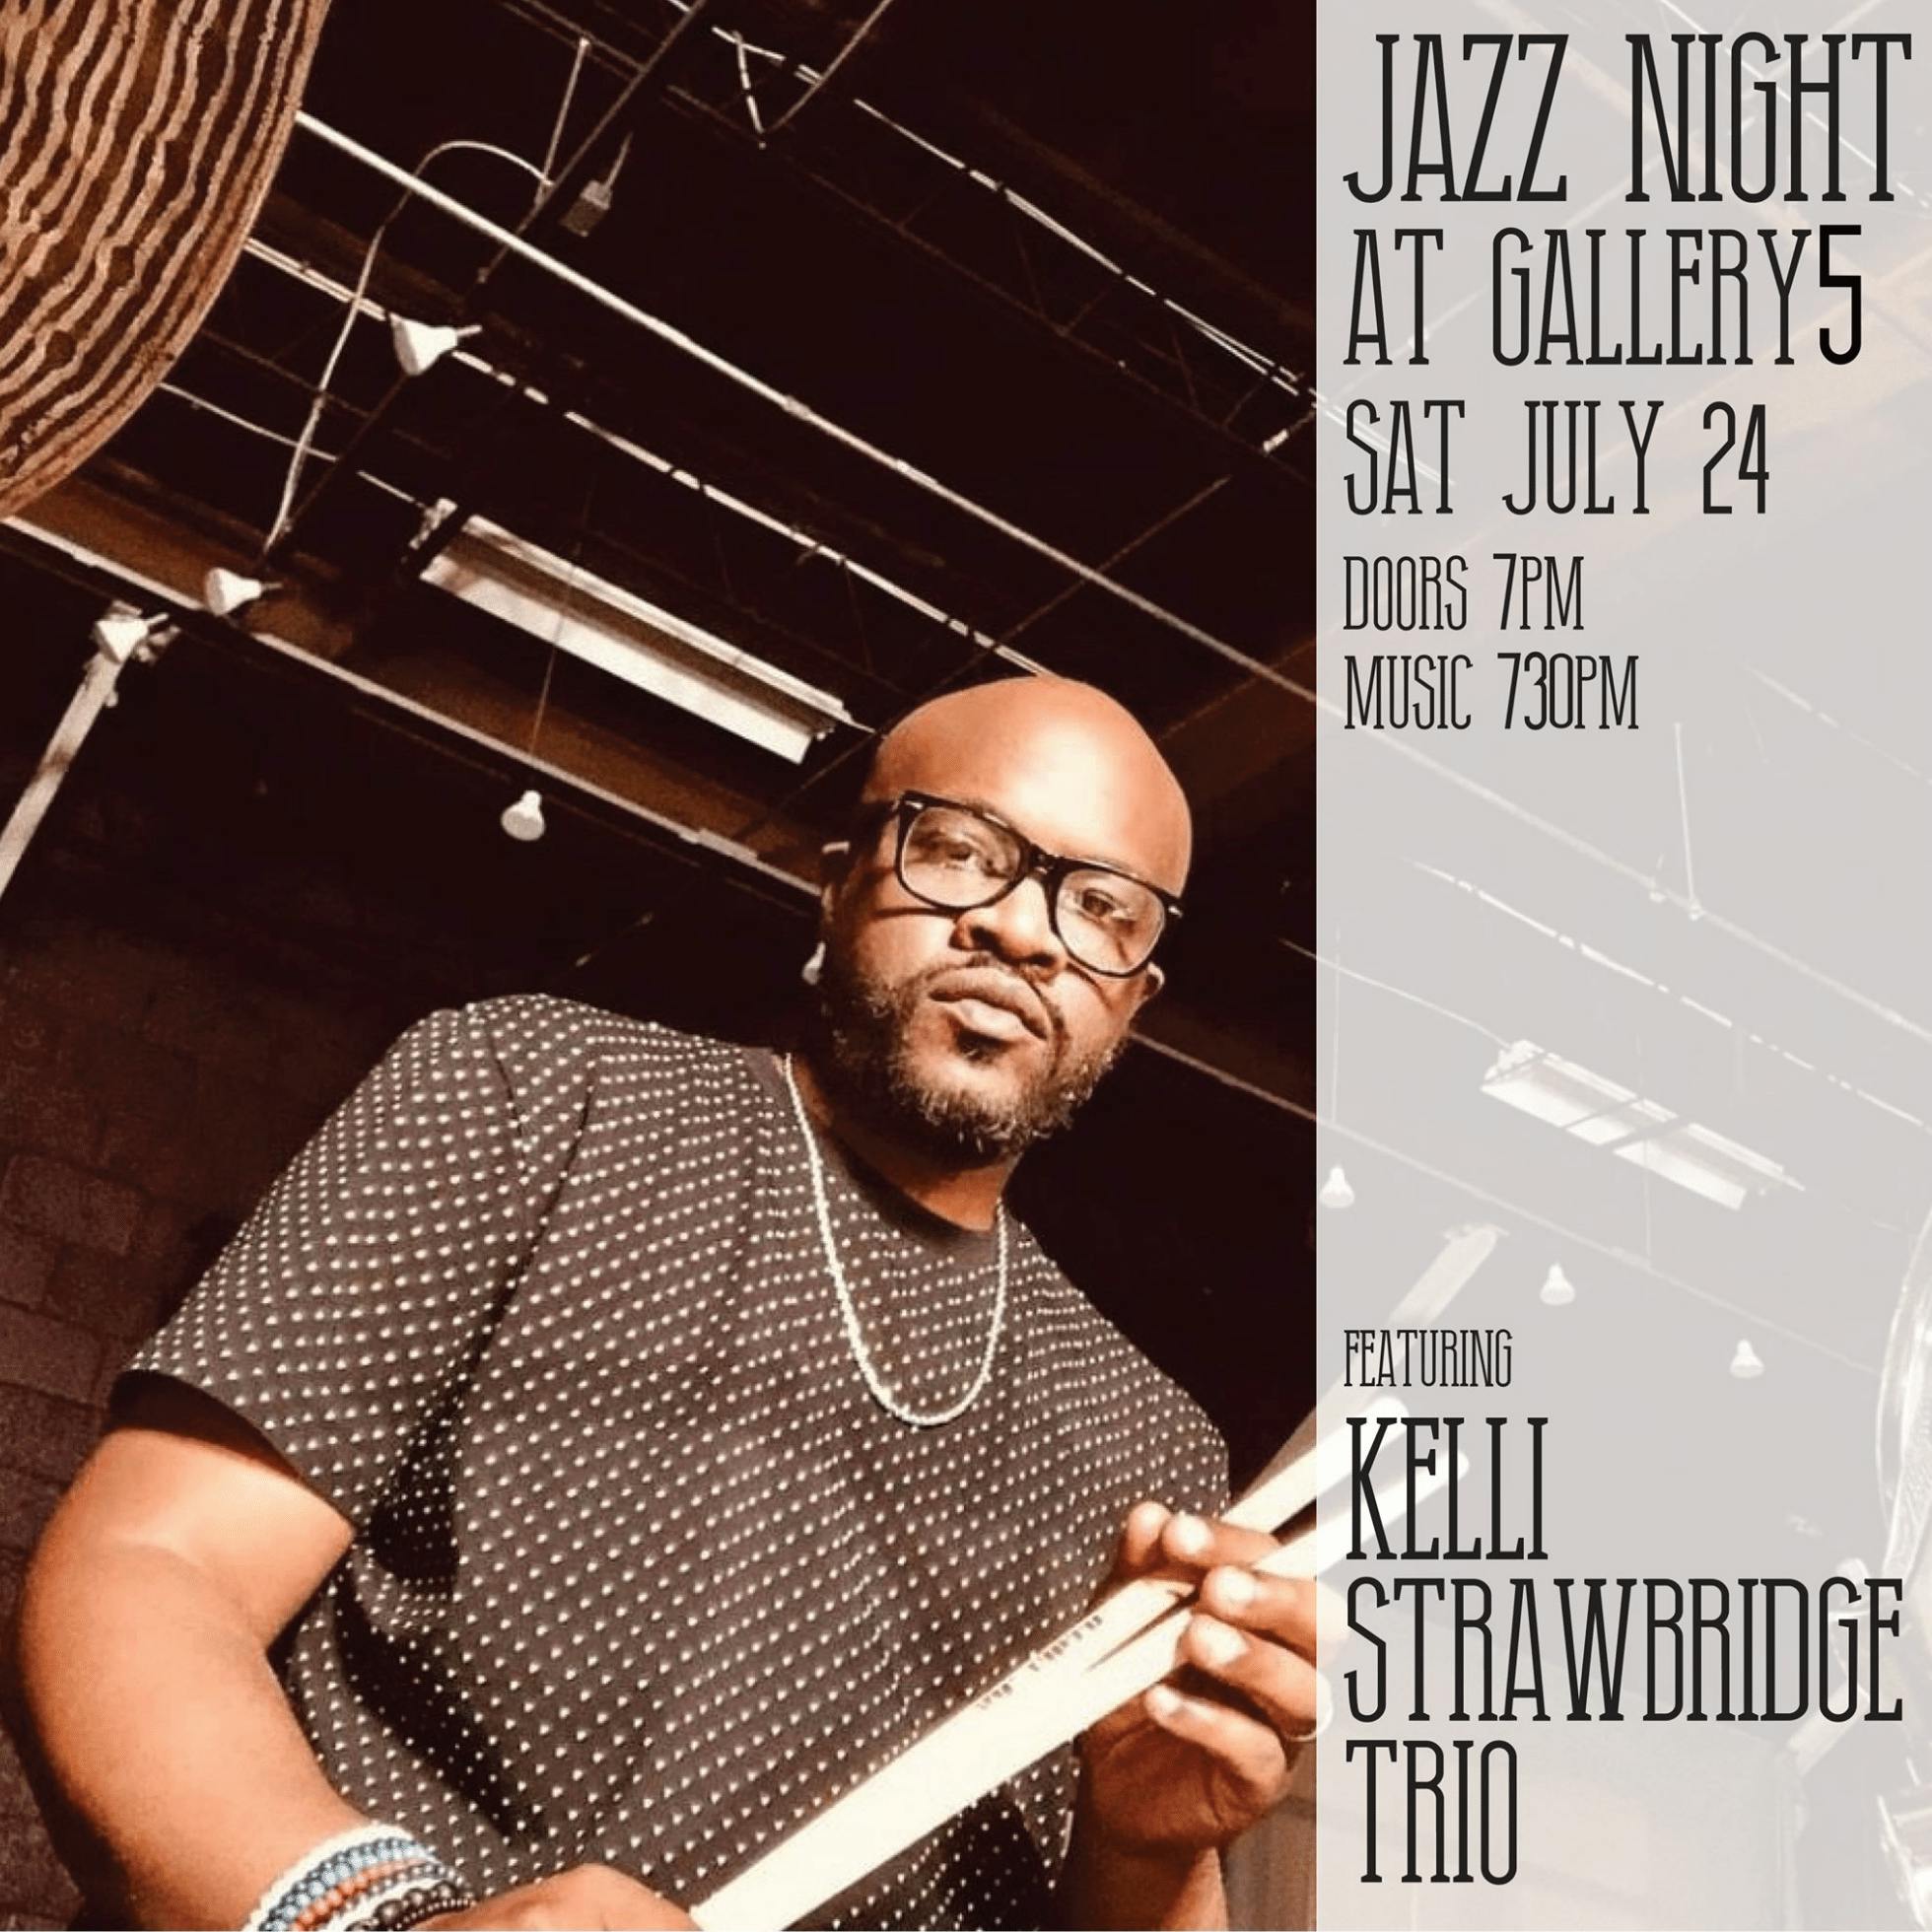 Jazz Night at Gallery5 Featuring Kelli Strawbridge Trio